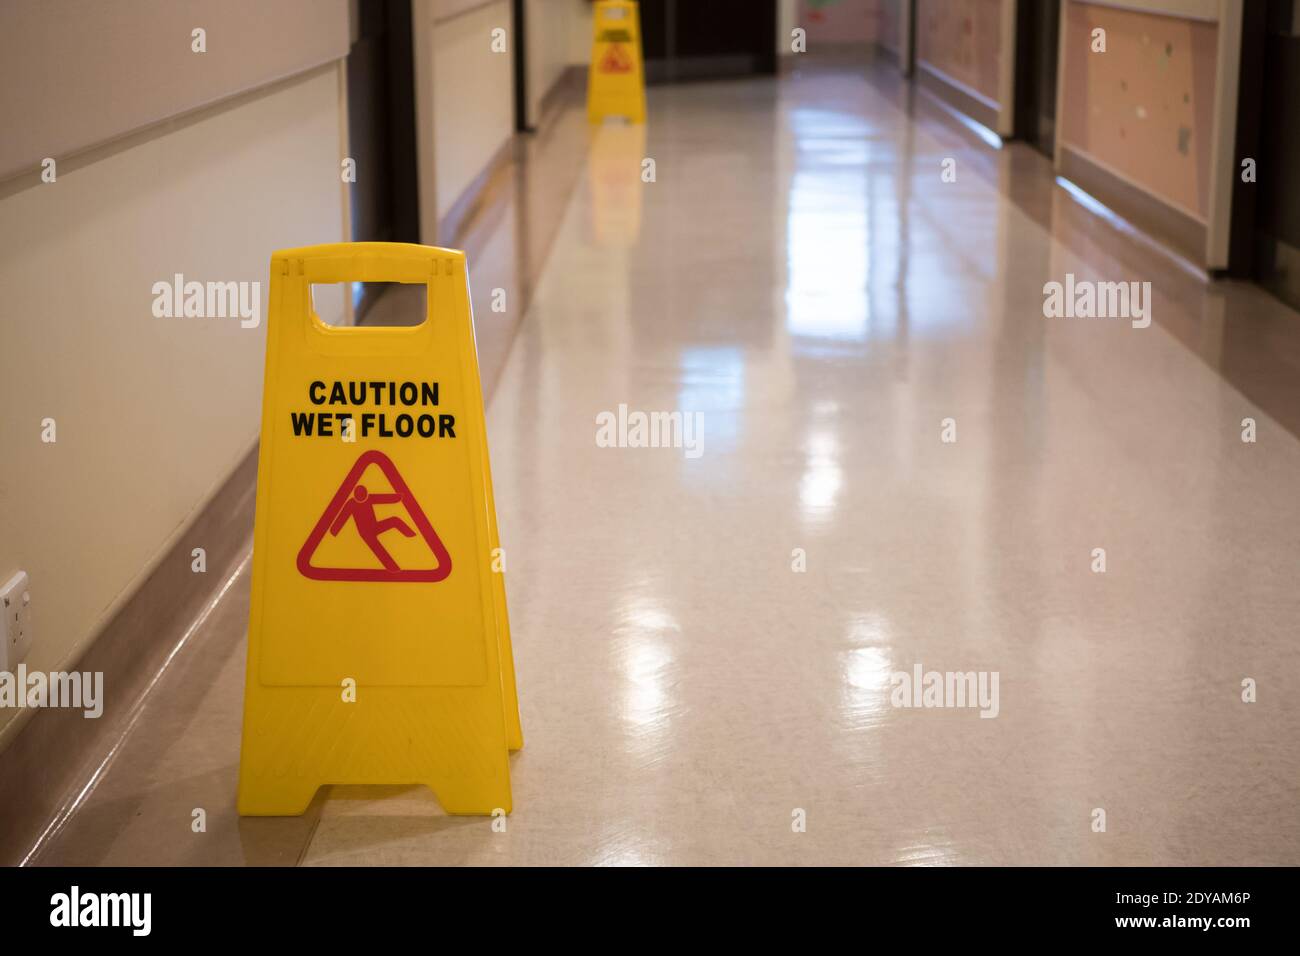 Sign showing warning of caution wet floor in hospital corridor. Stock Photo